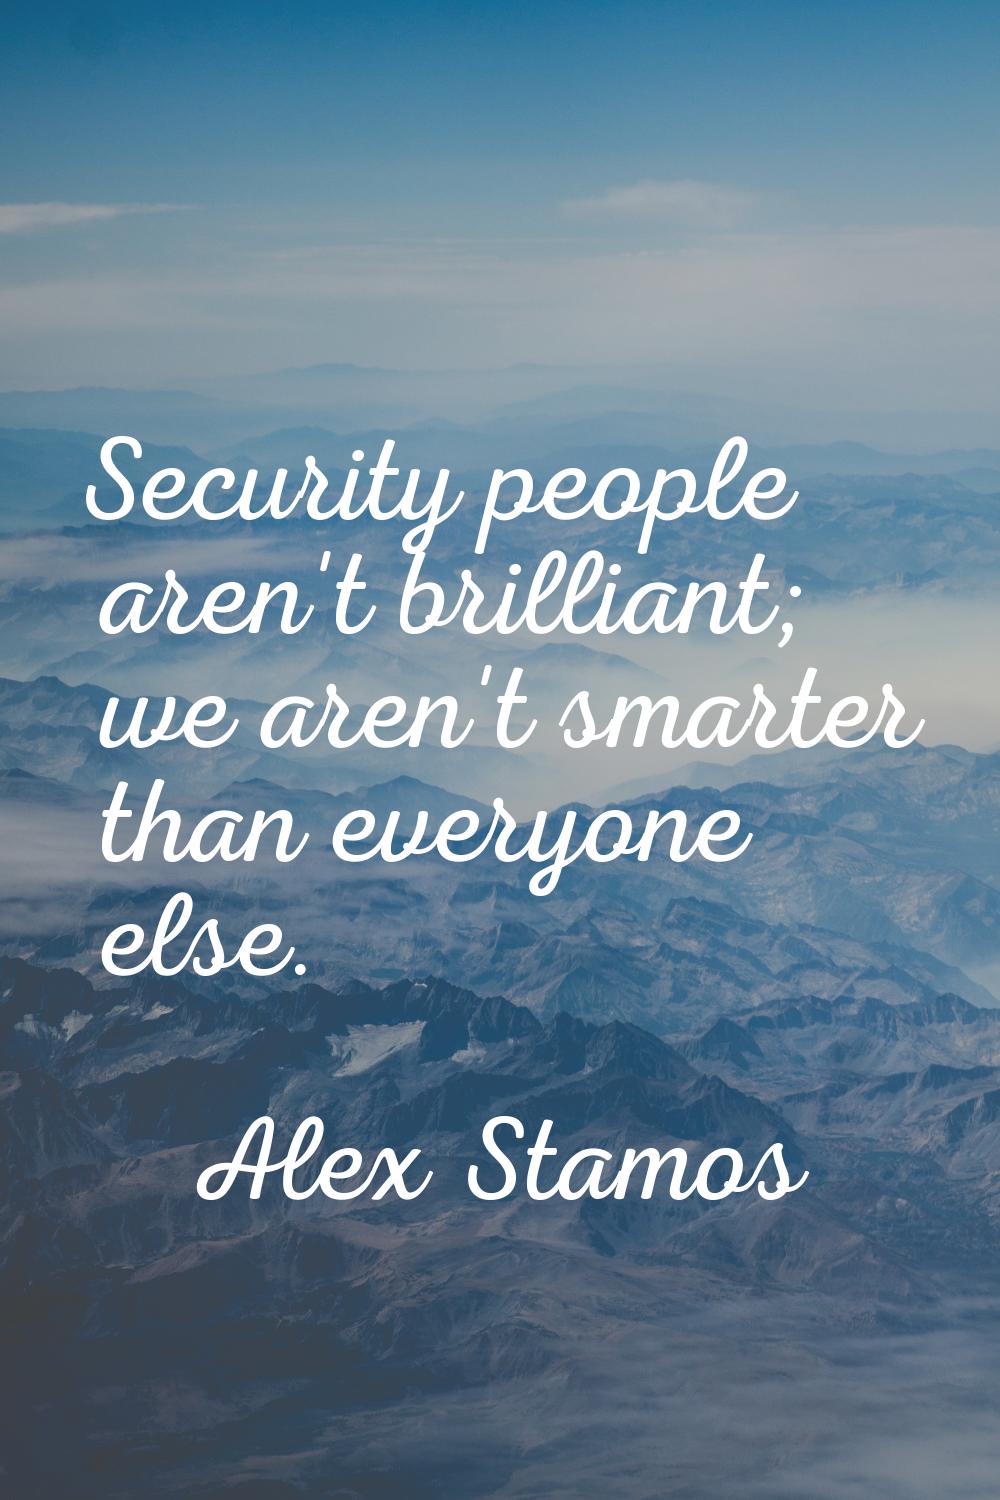 Security people aren't brilliant; we aren't smarter than everyone else.